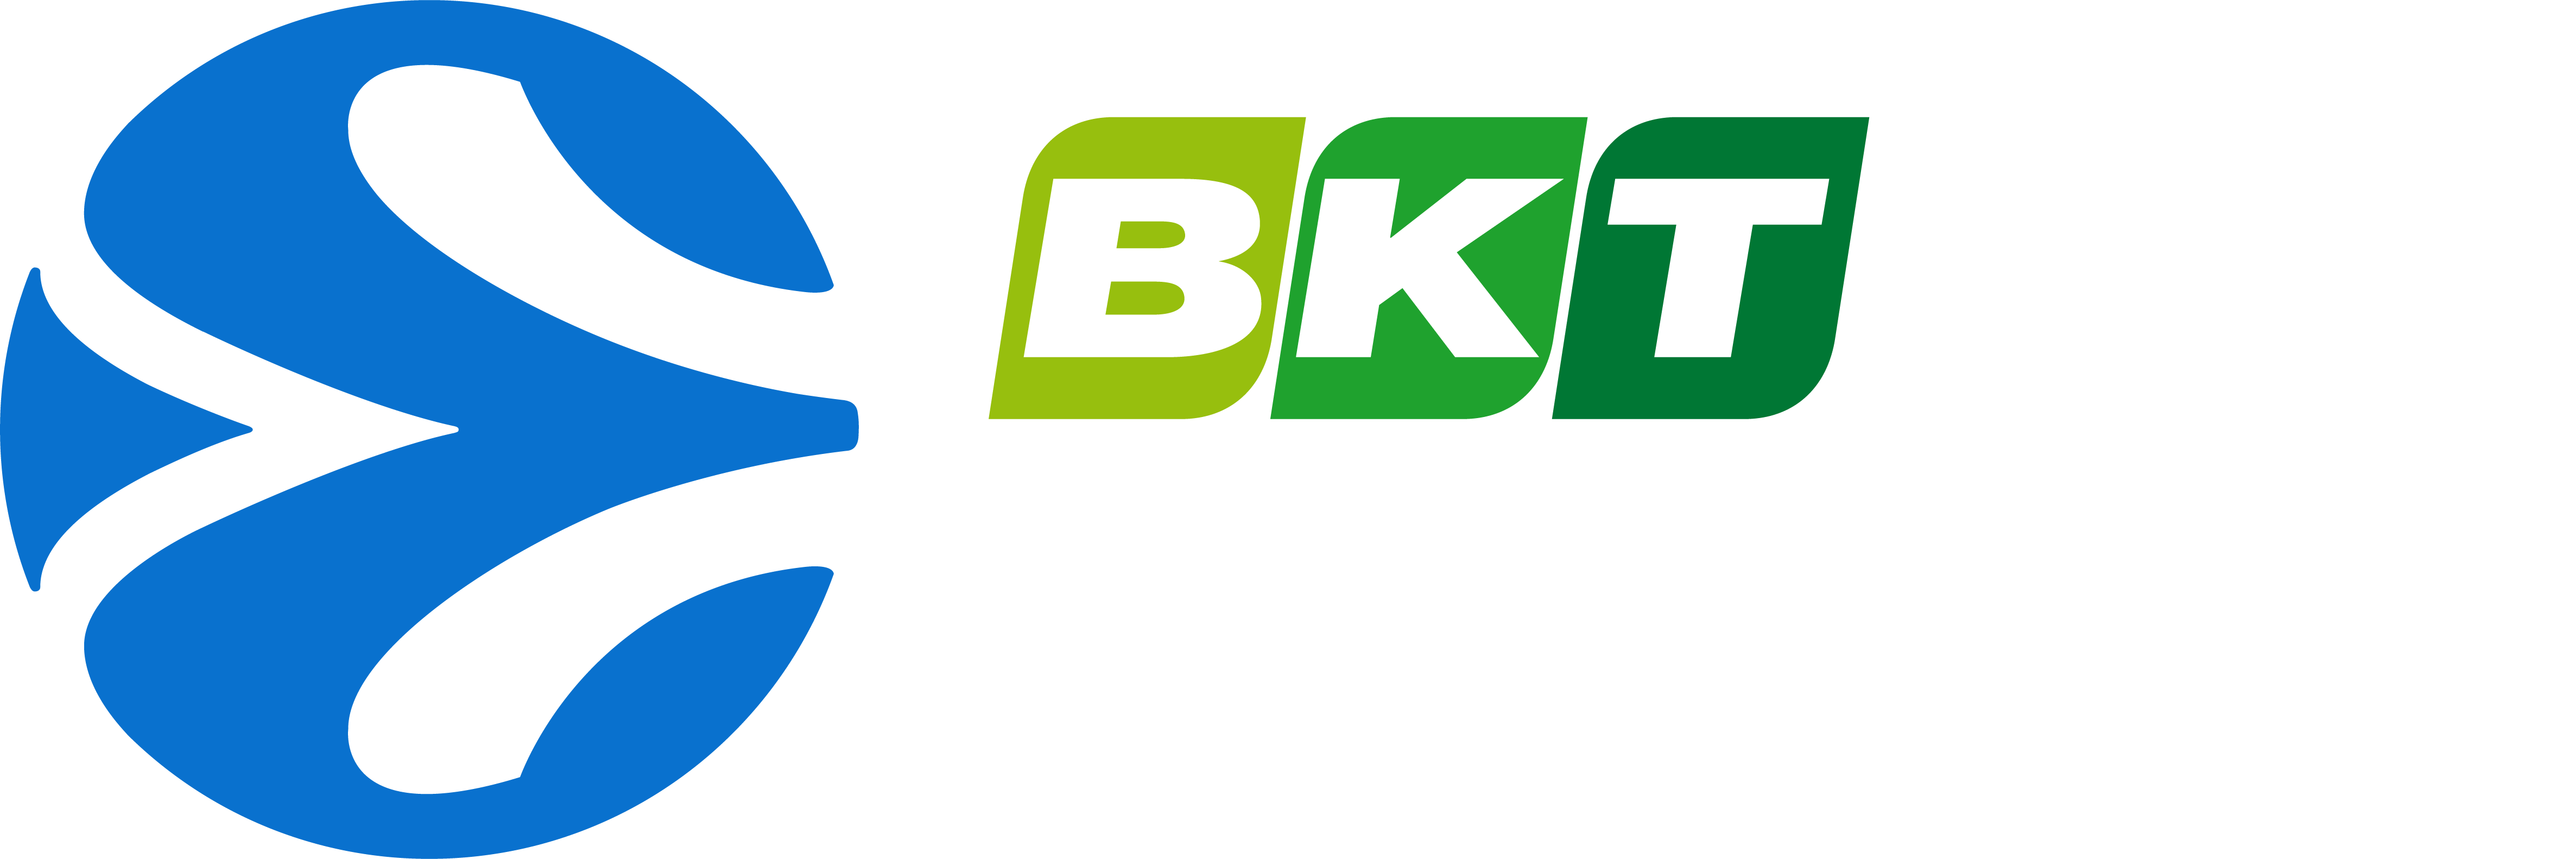 eurocup-logo